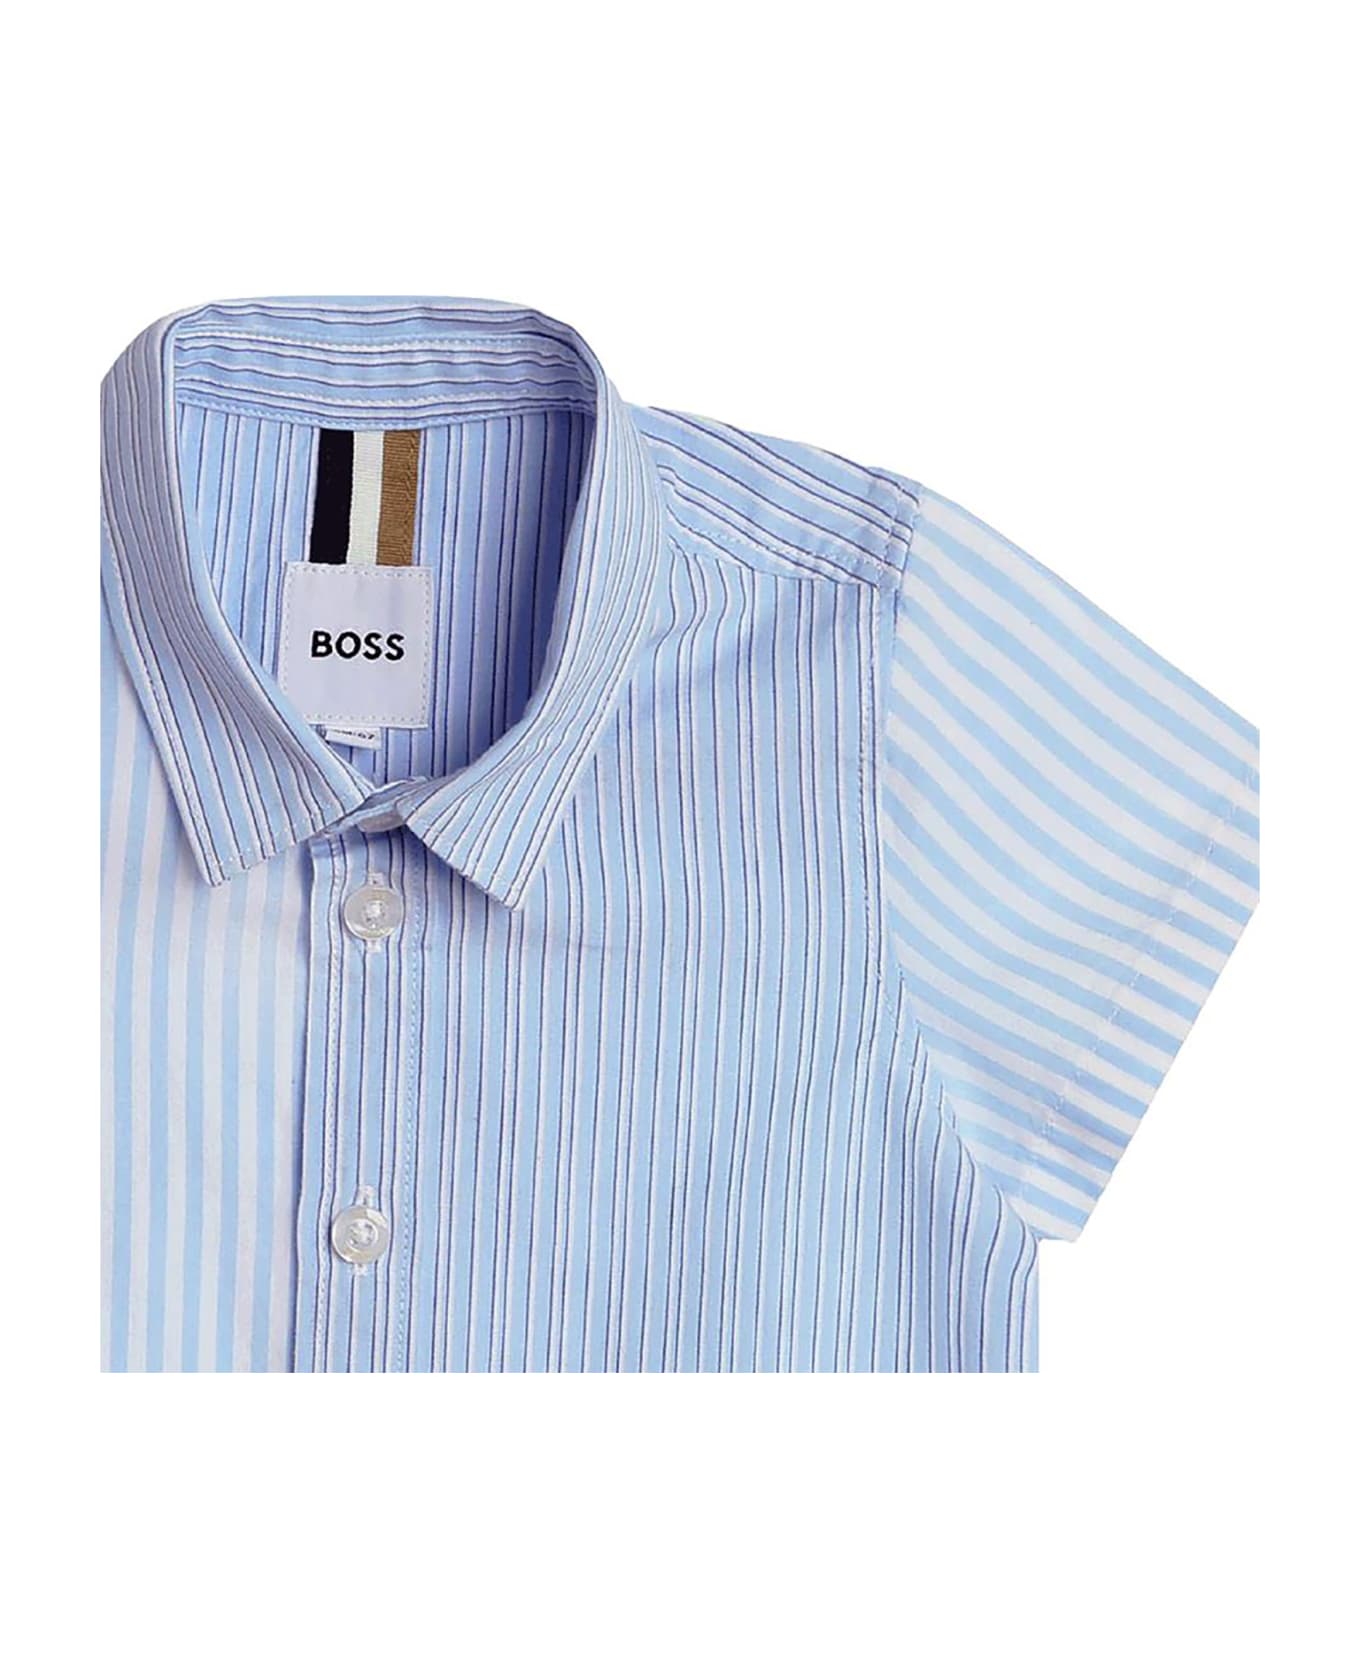 Hugo Boss Light Blue Shirt For Baby Boy With Stripes - Light Blue